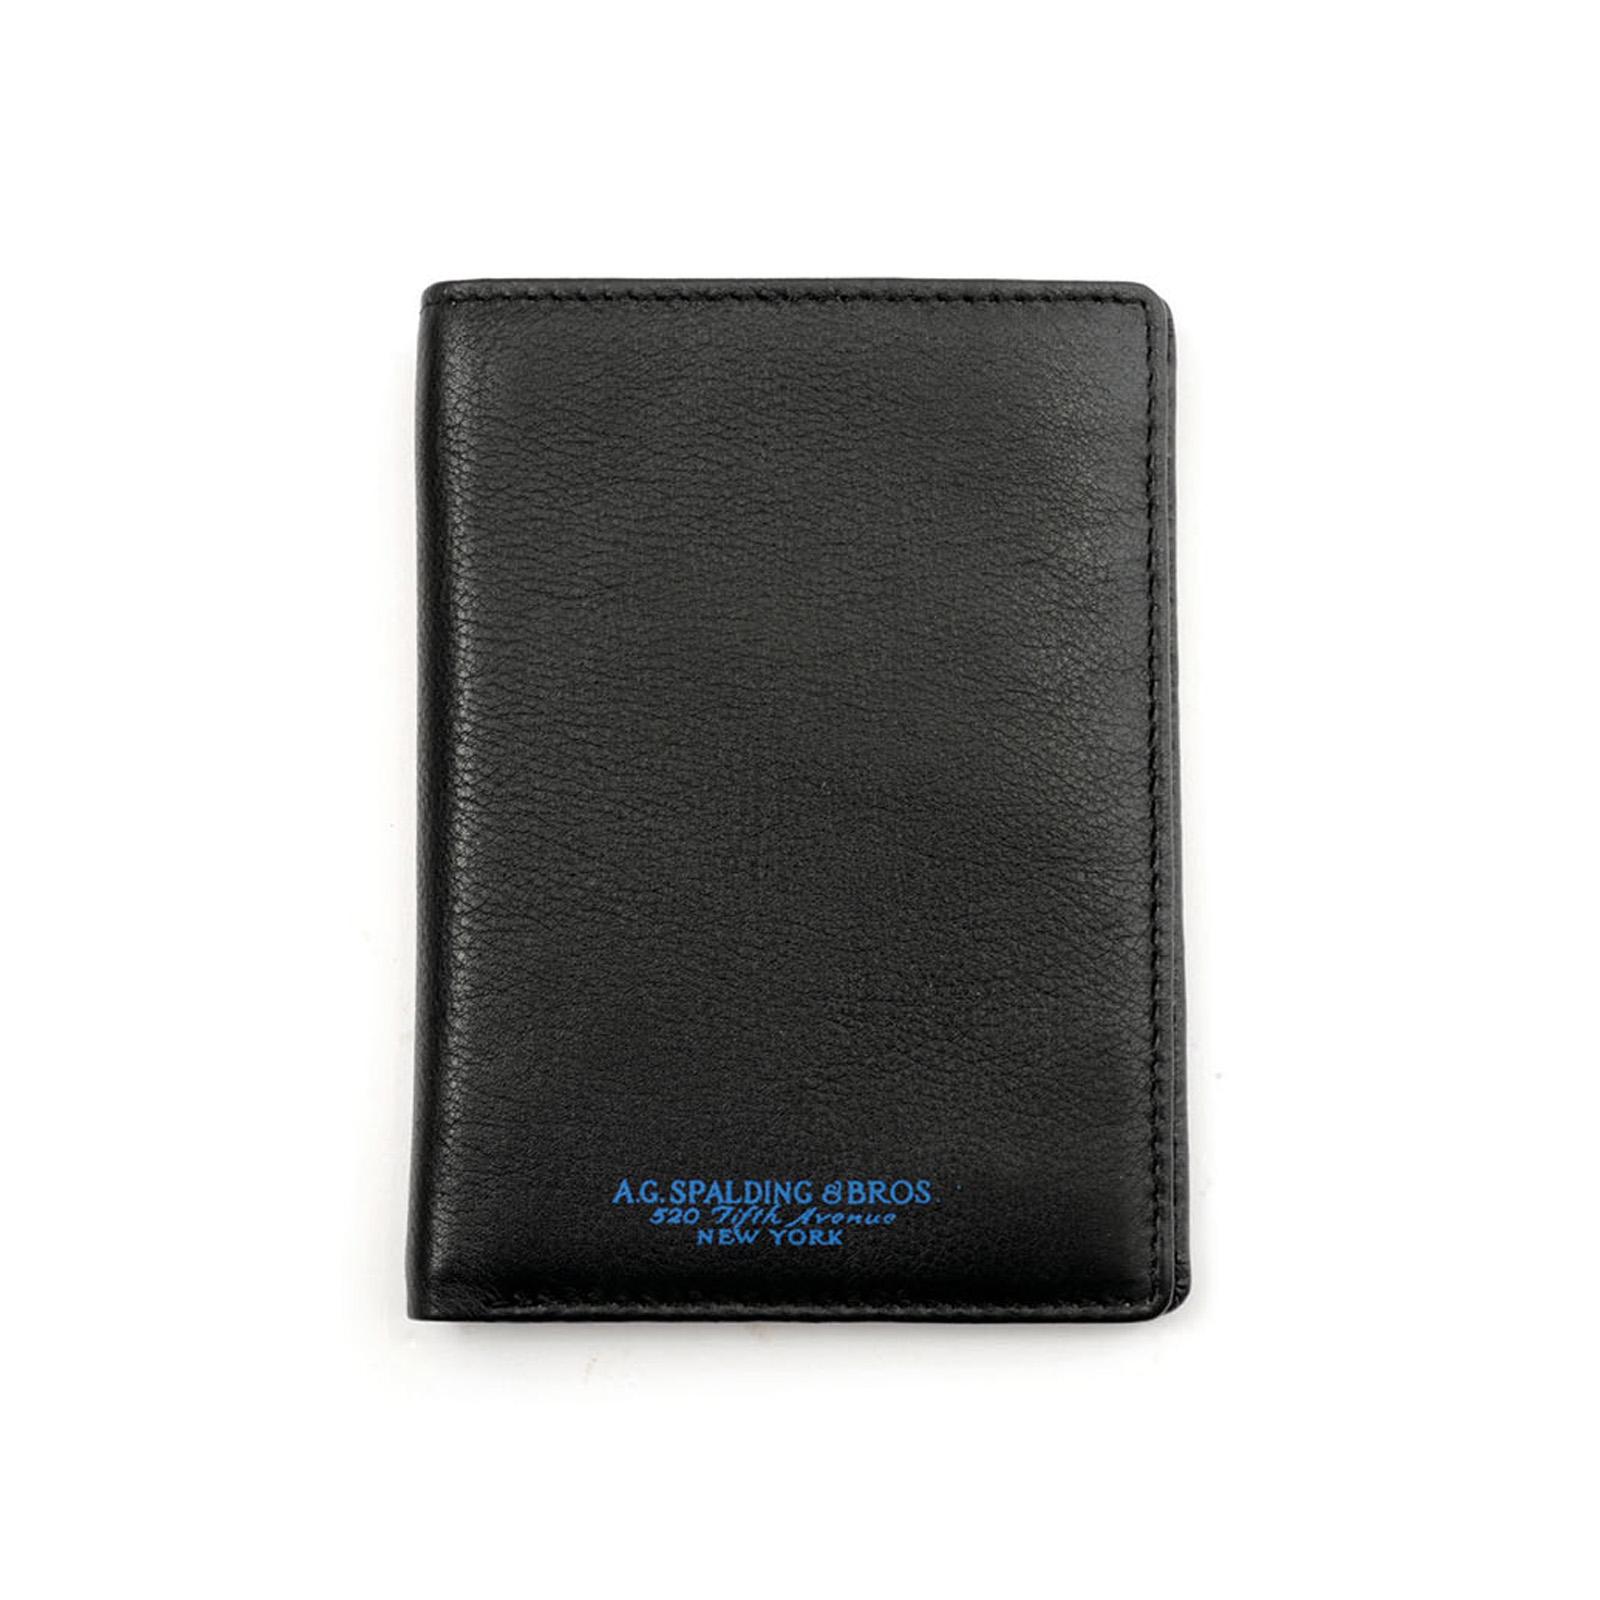 Manhattan Color Vertical 8cc Wallet BLACK/blue 